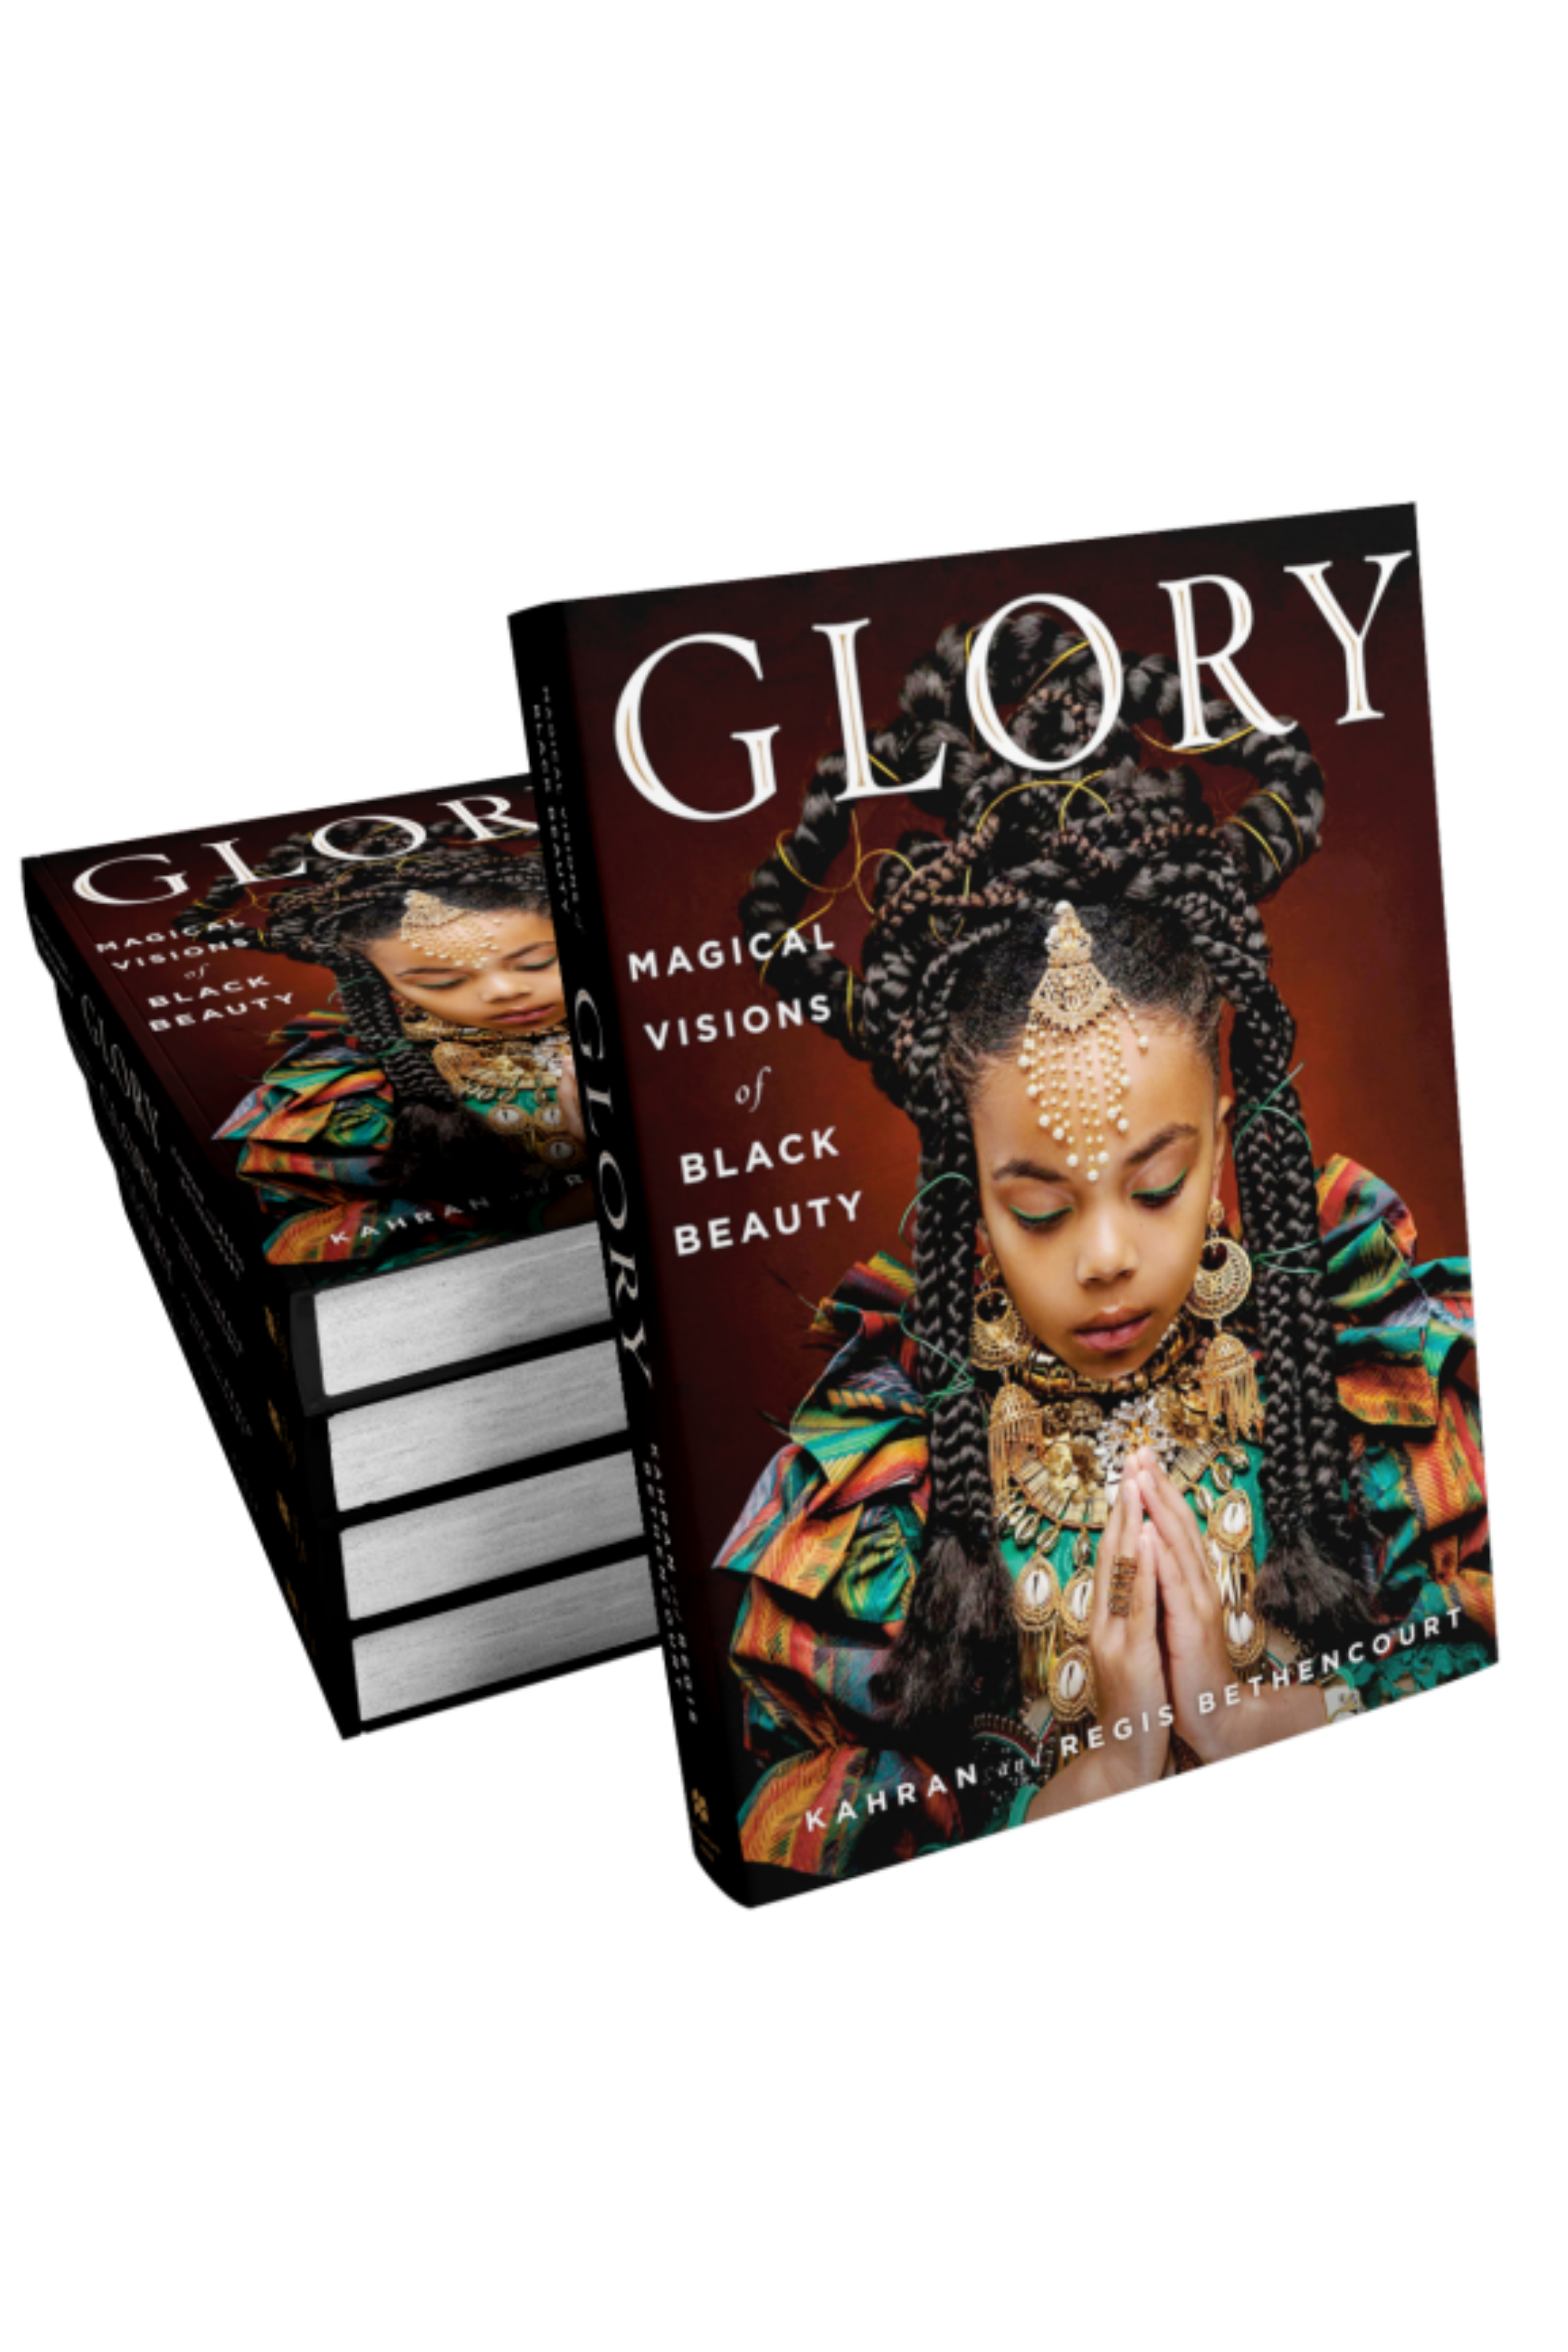 "GLORY: Magical Visions of Black Beauty" by Kahran Bethencourt, Regis Bethencourt & Amanda Seales